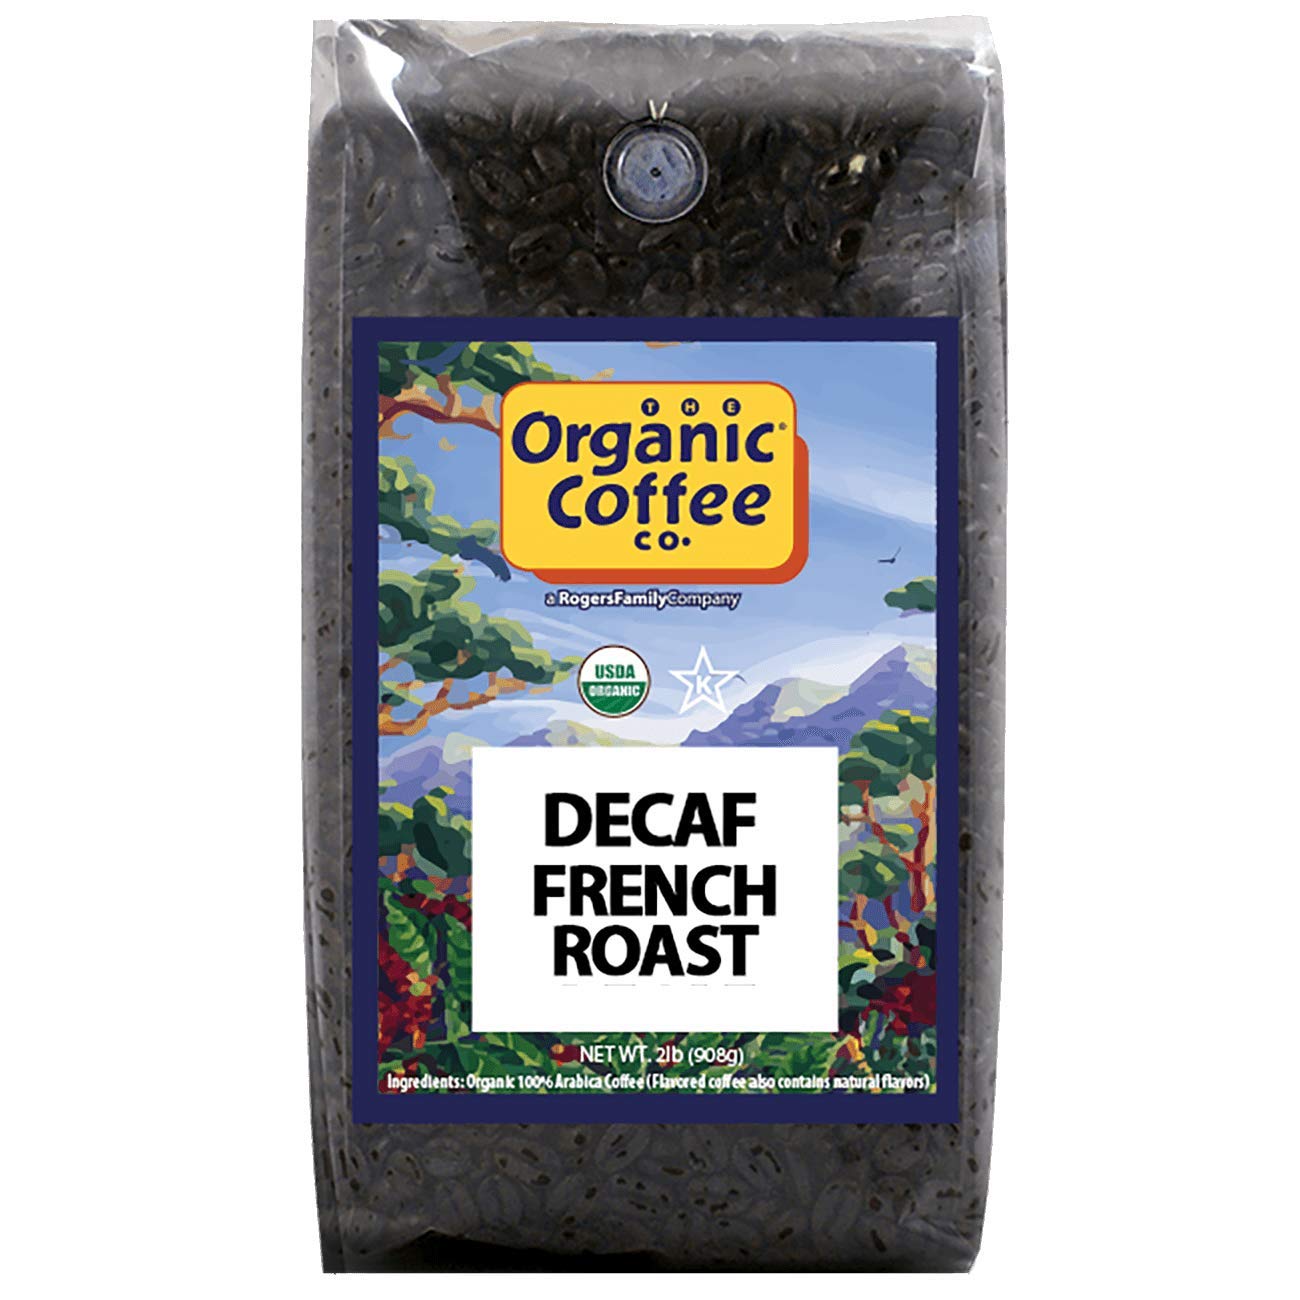 The Organic Coffee Co. Whole Bean Coffee - DECAF French Roast (2lb Bag), Dark Roast, Swiss Water Processed, USDA Organic